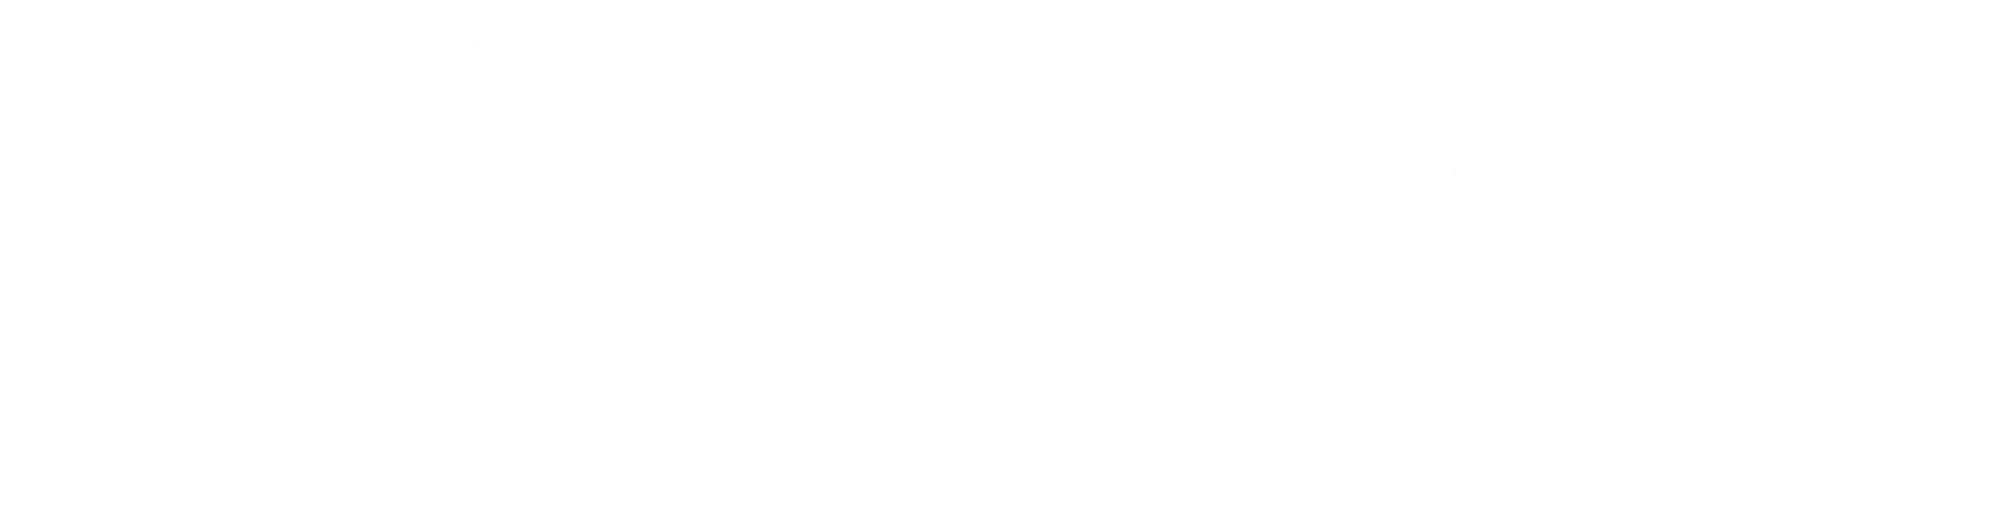 Diflora Logo